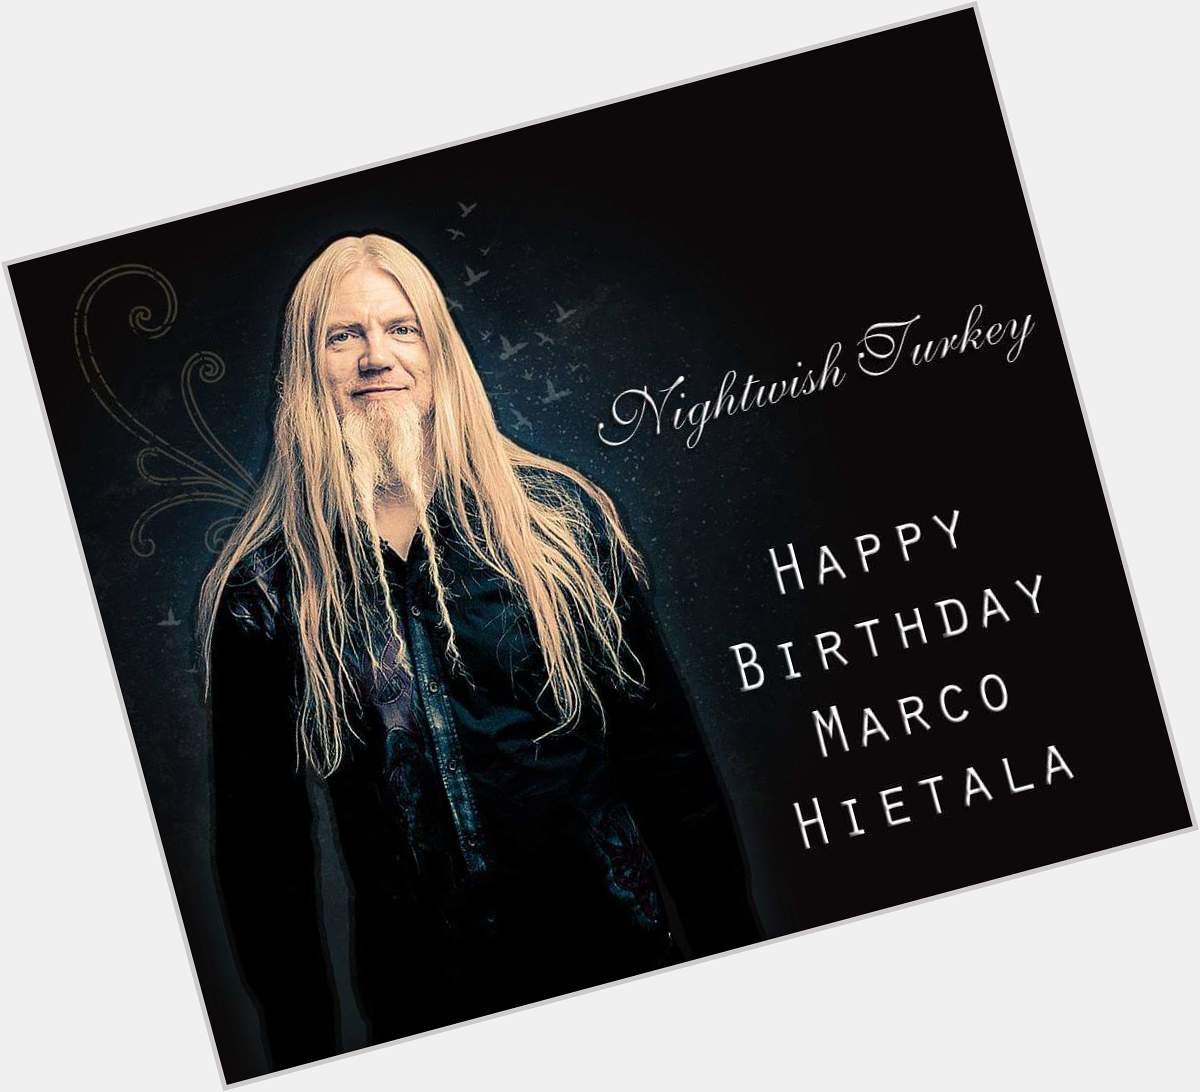 Happy birthday Marco Hietala  